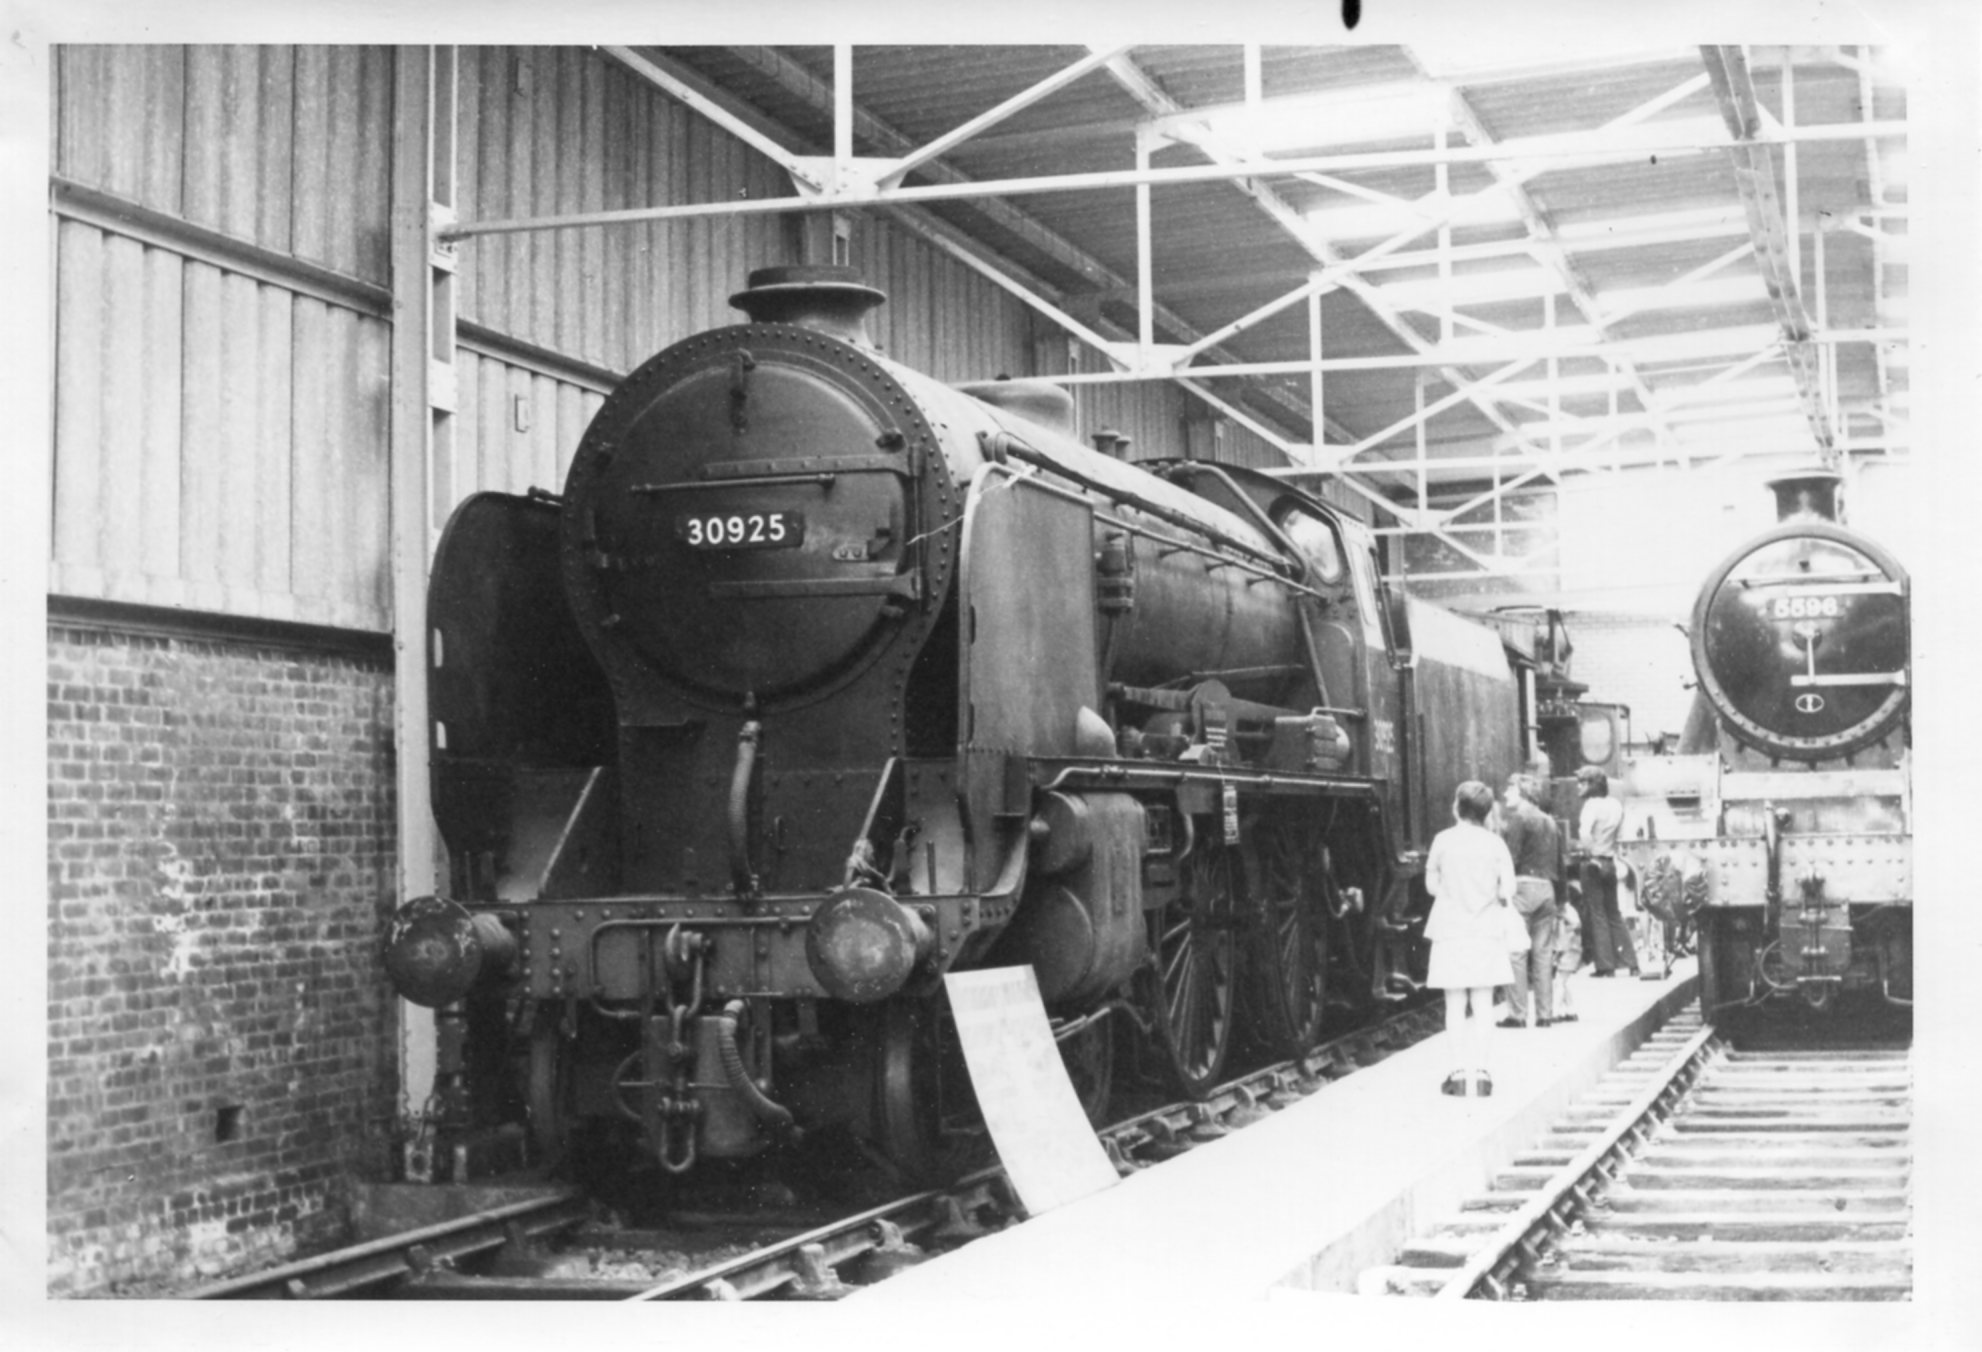 30925 stored alongside 5596 Bahamas at Dinting Railway Centre. 23rd June 1974. Roger Darsley